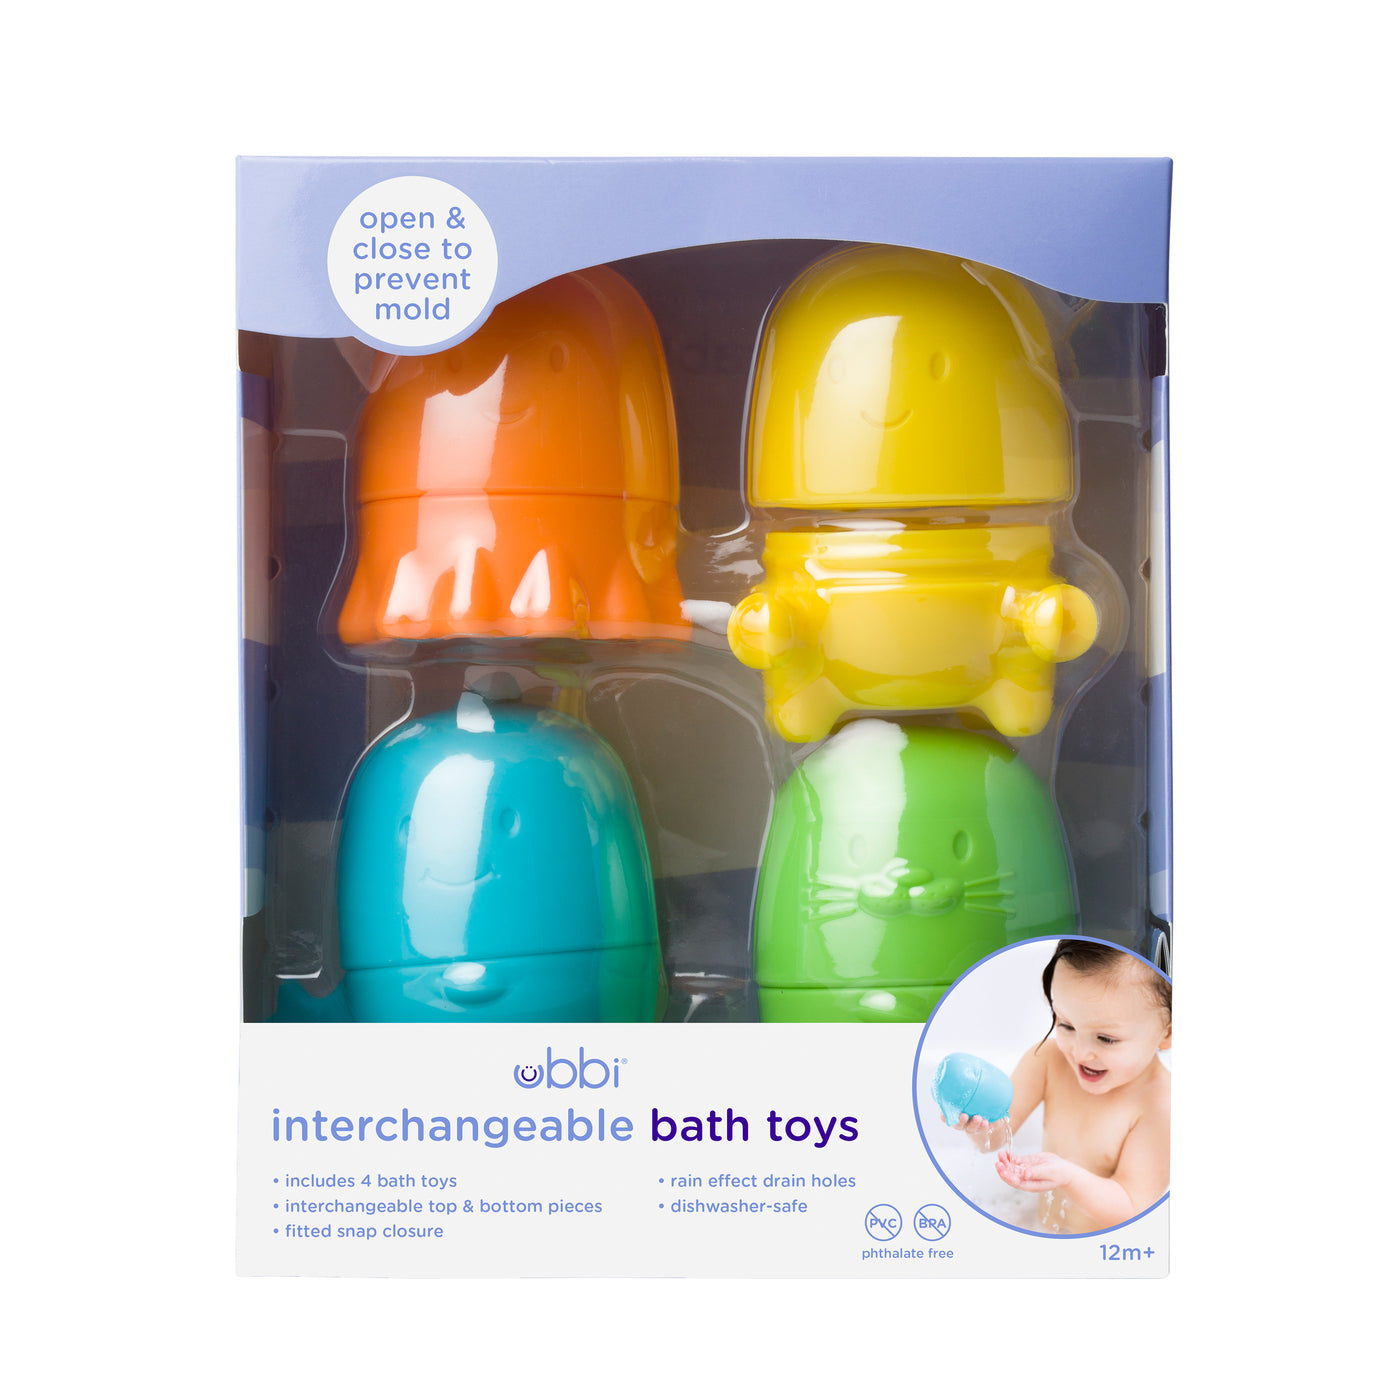 interchangeable bath toys